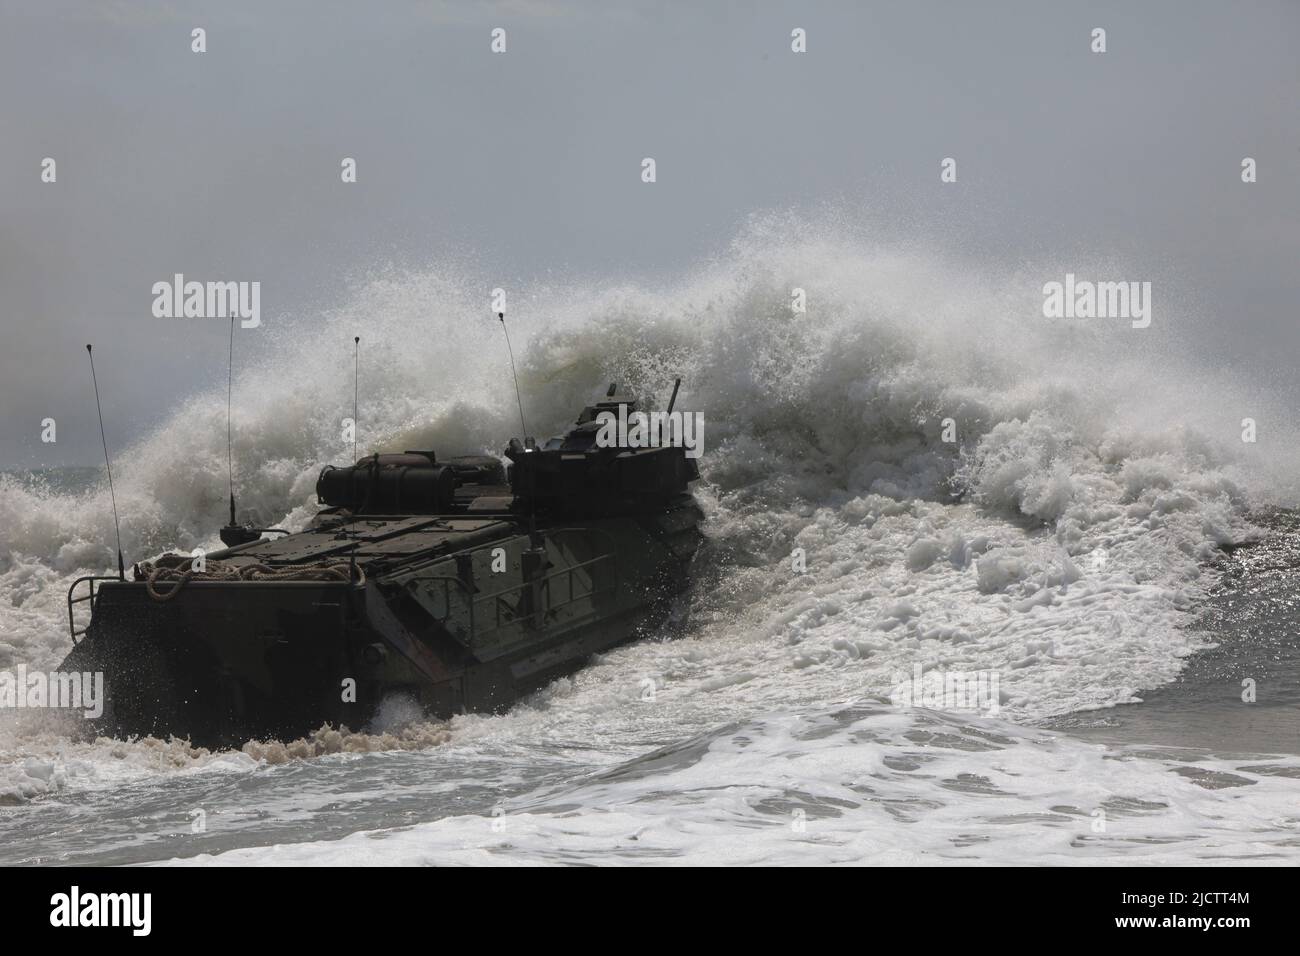 US Marine Corps AAV battles the surf. Stock Photo